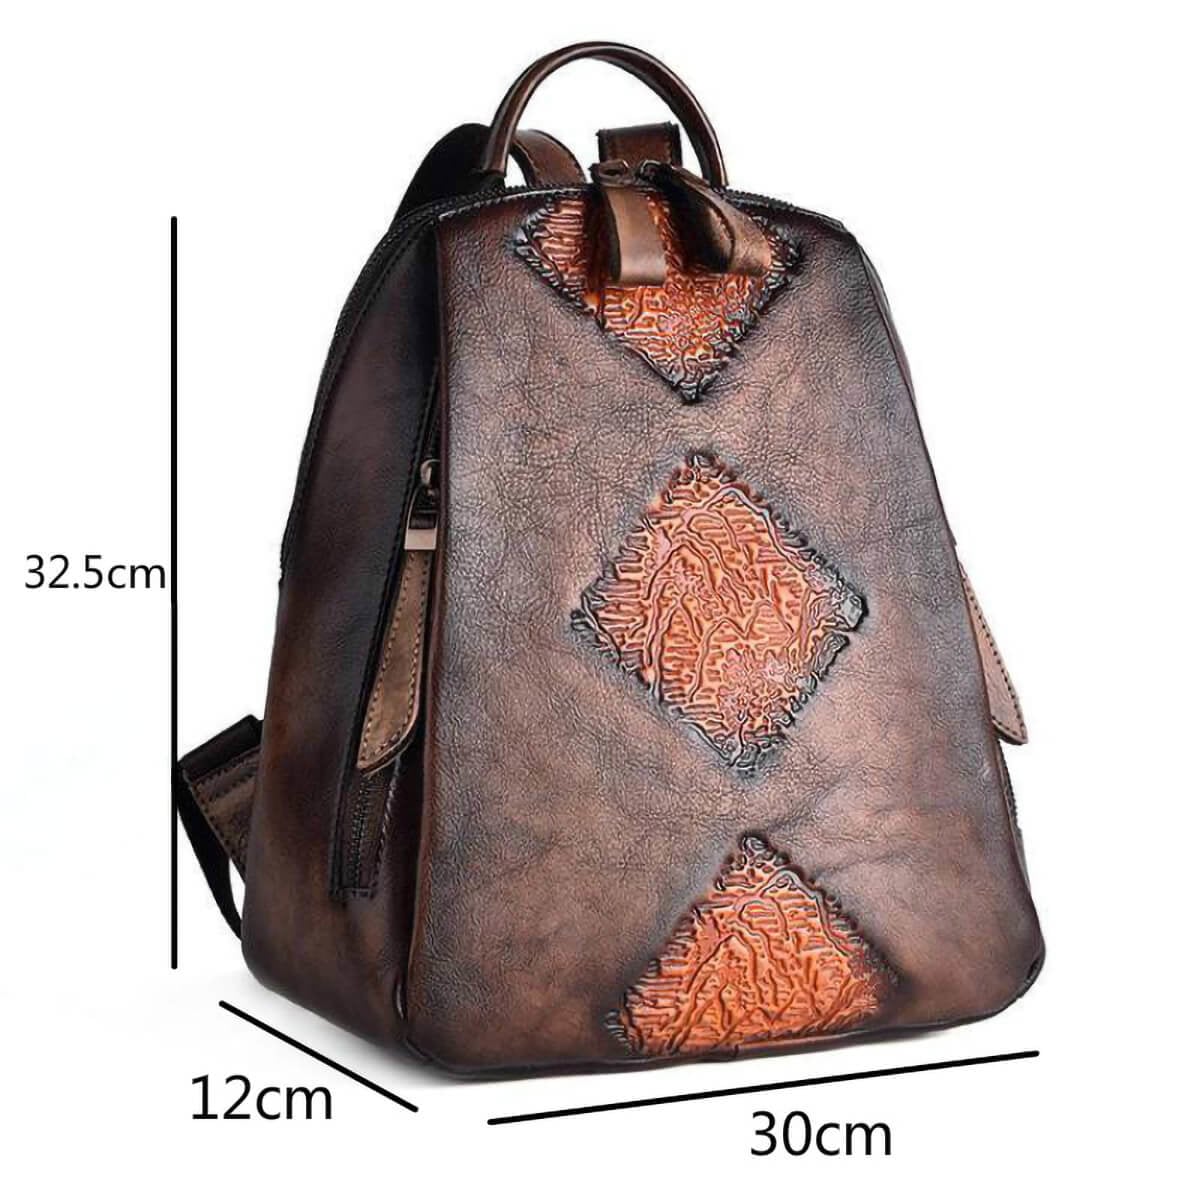 Unique Handmade Backpack for Women